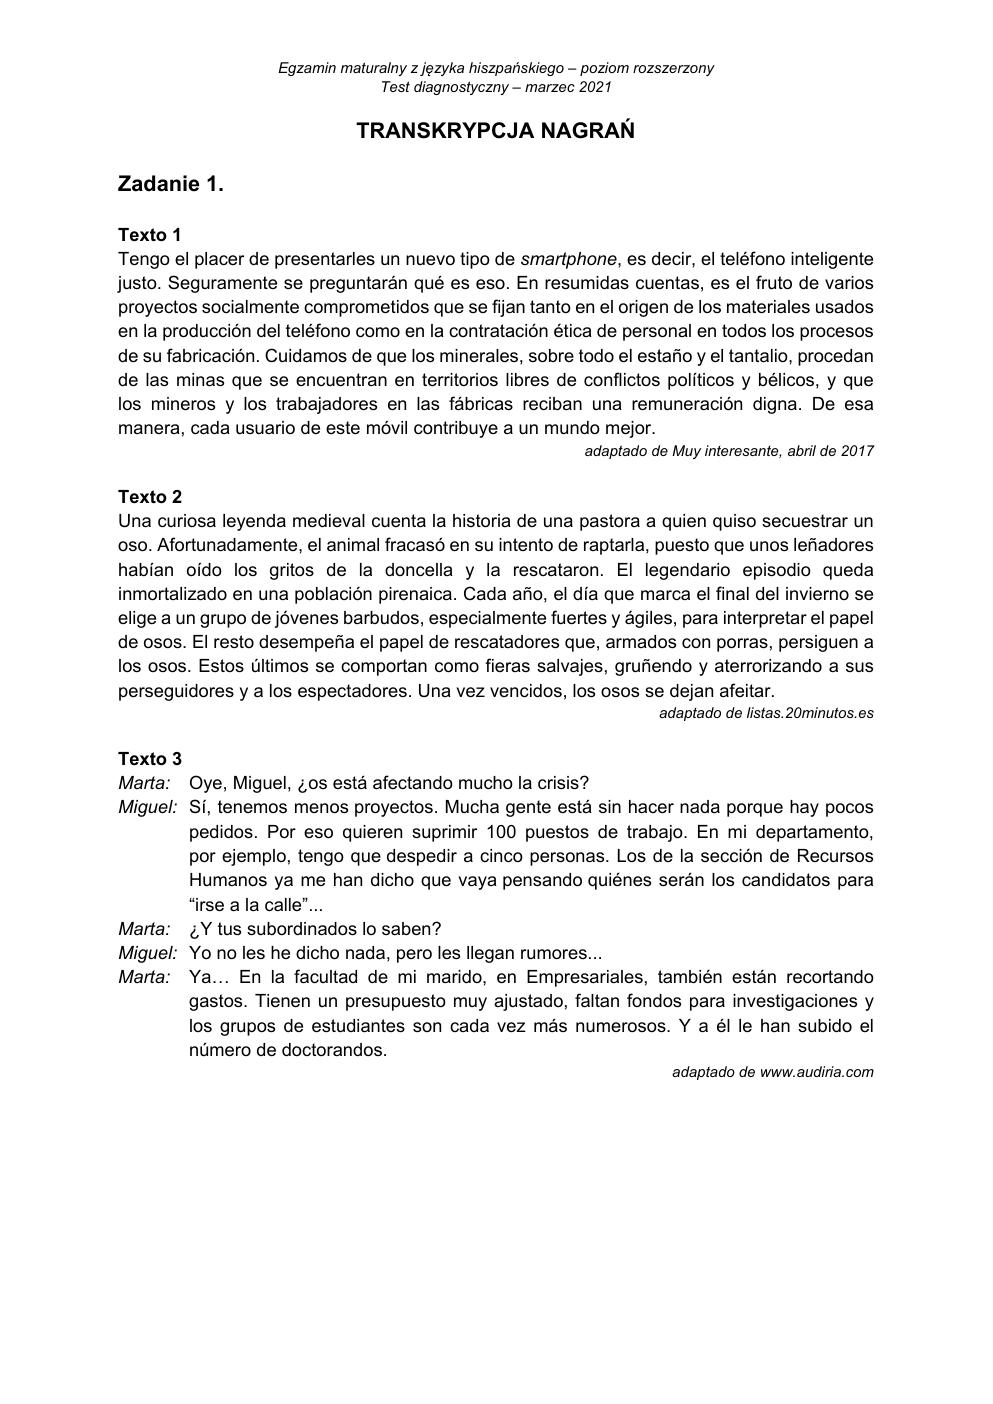 transkrypcja - hiszpański rozszerzony - matura 2021 próbna-1